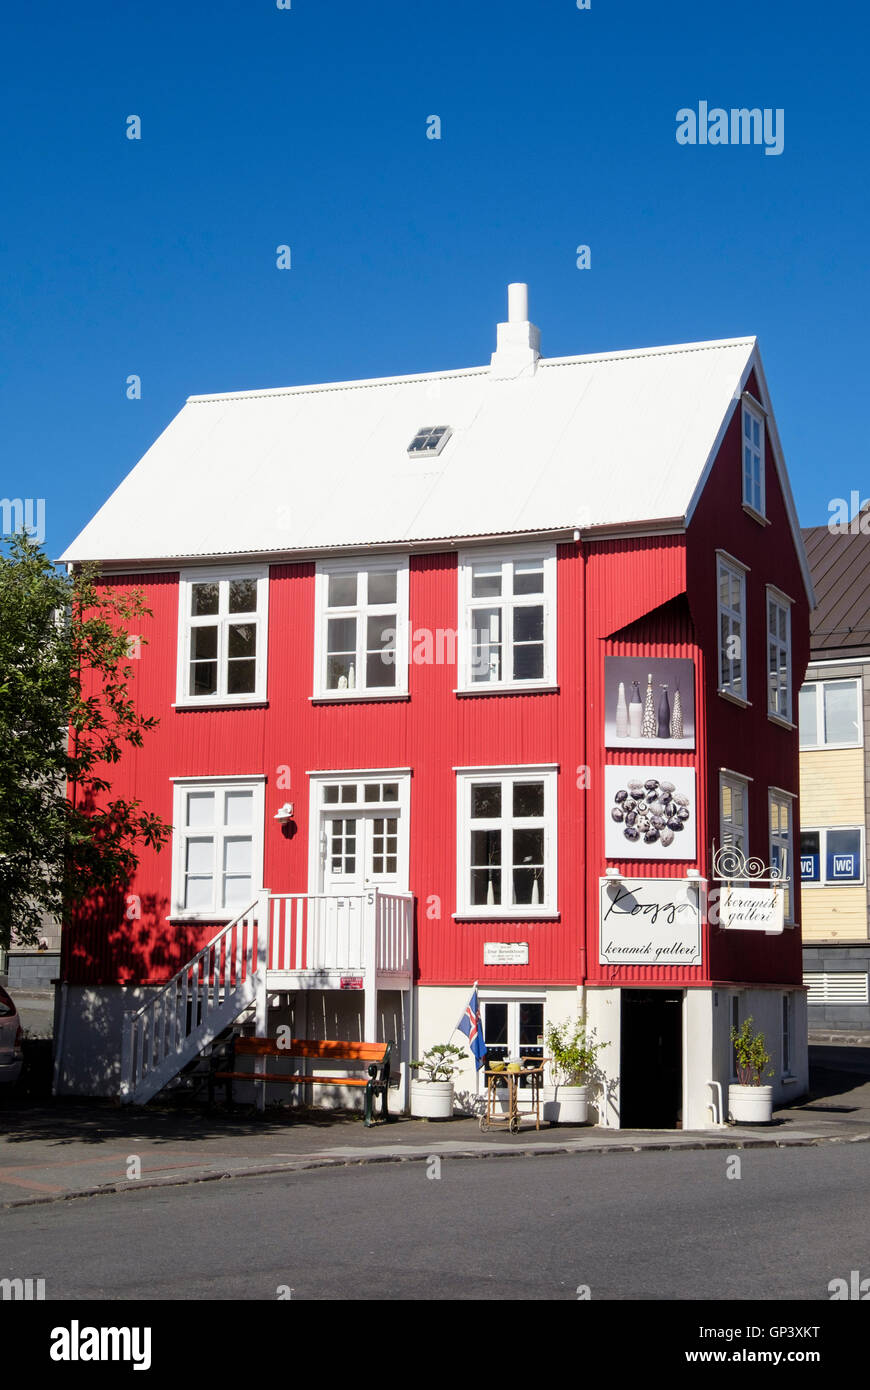 Kogga ceramics gallery and studio in traditional red wooden building. Vesturgata, Reykjavik, Iceland Stock Photo